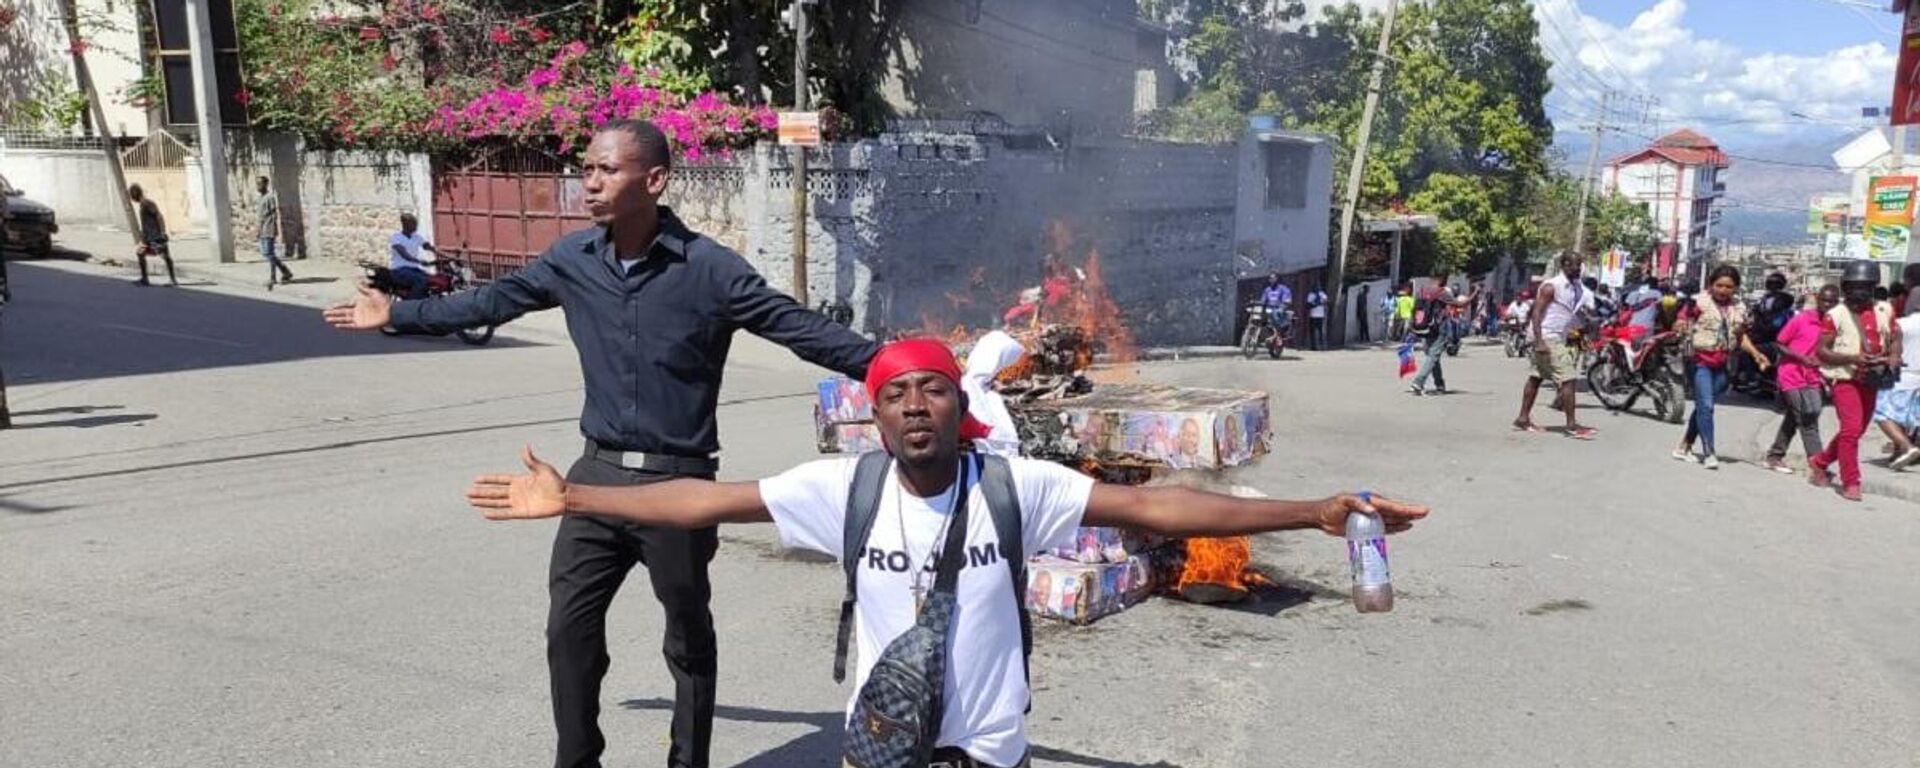 Barricadas y protestas en Haití - Sputnik Mundo, 1920, 07.02.2022